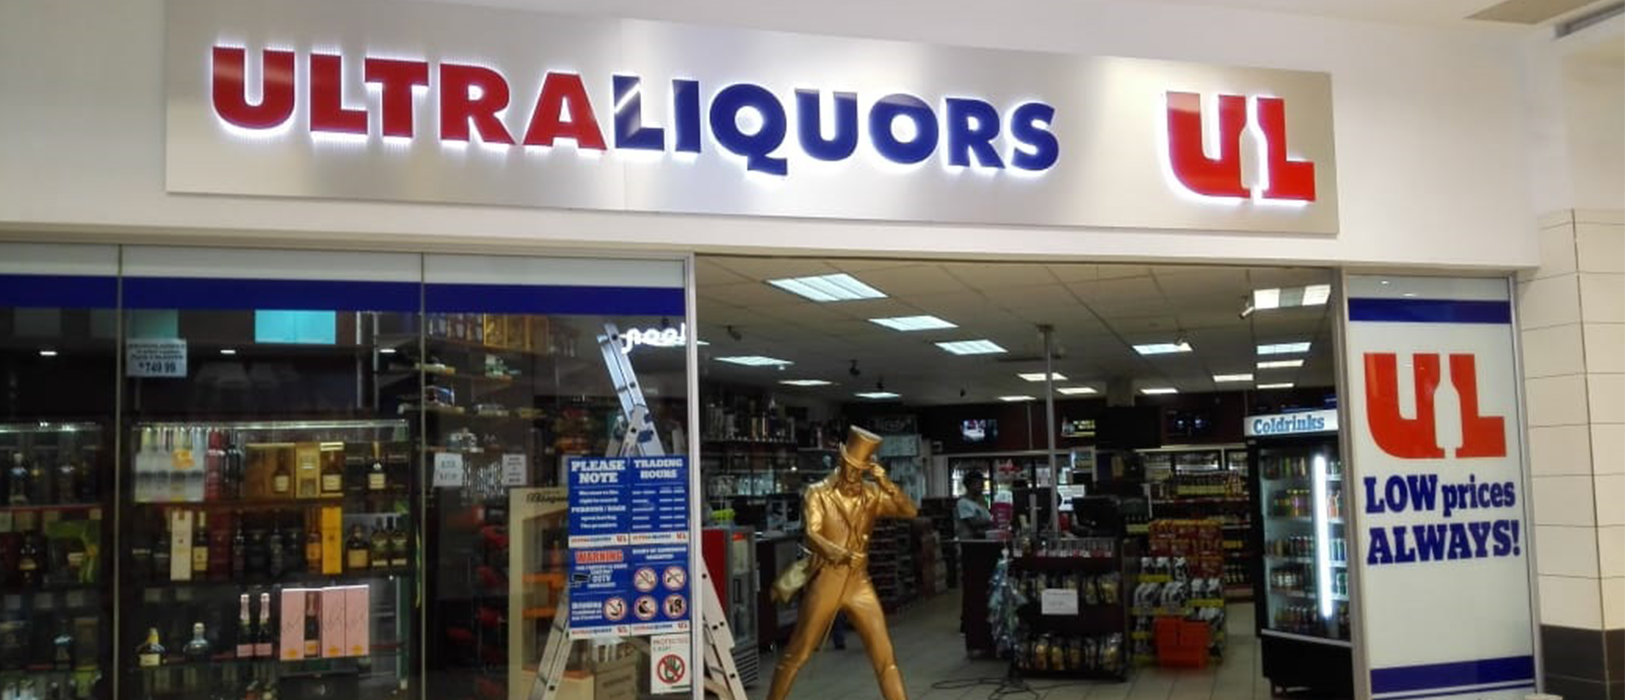 Ultra Liquors Signage